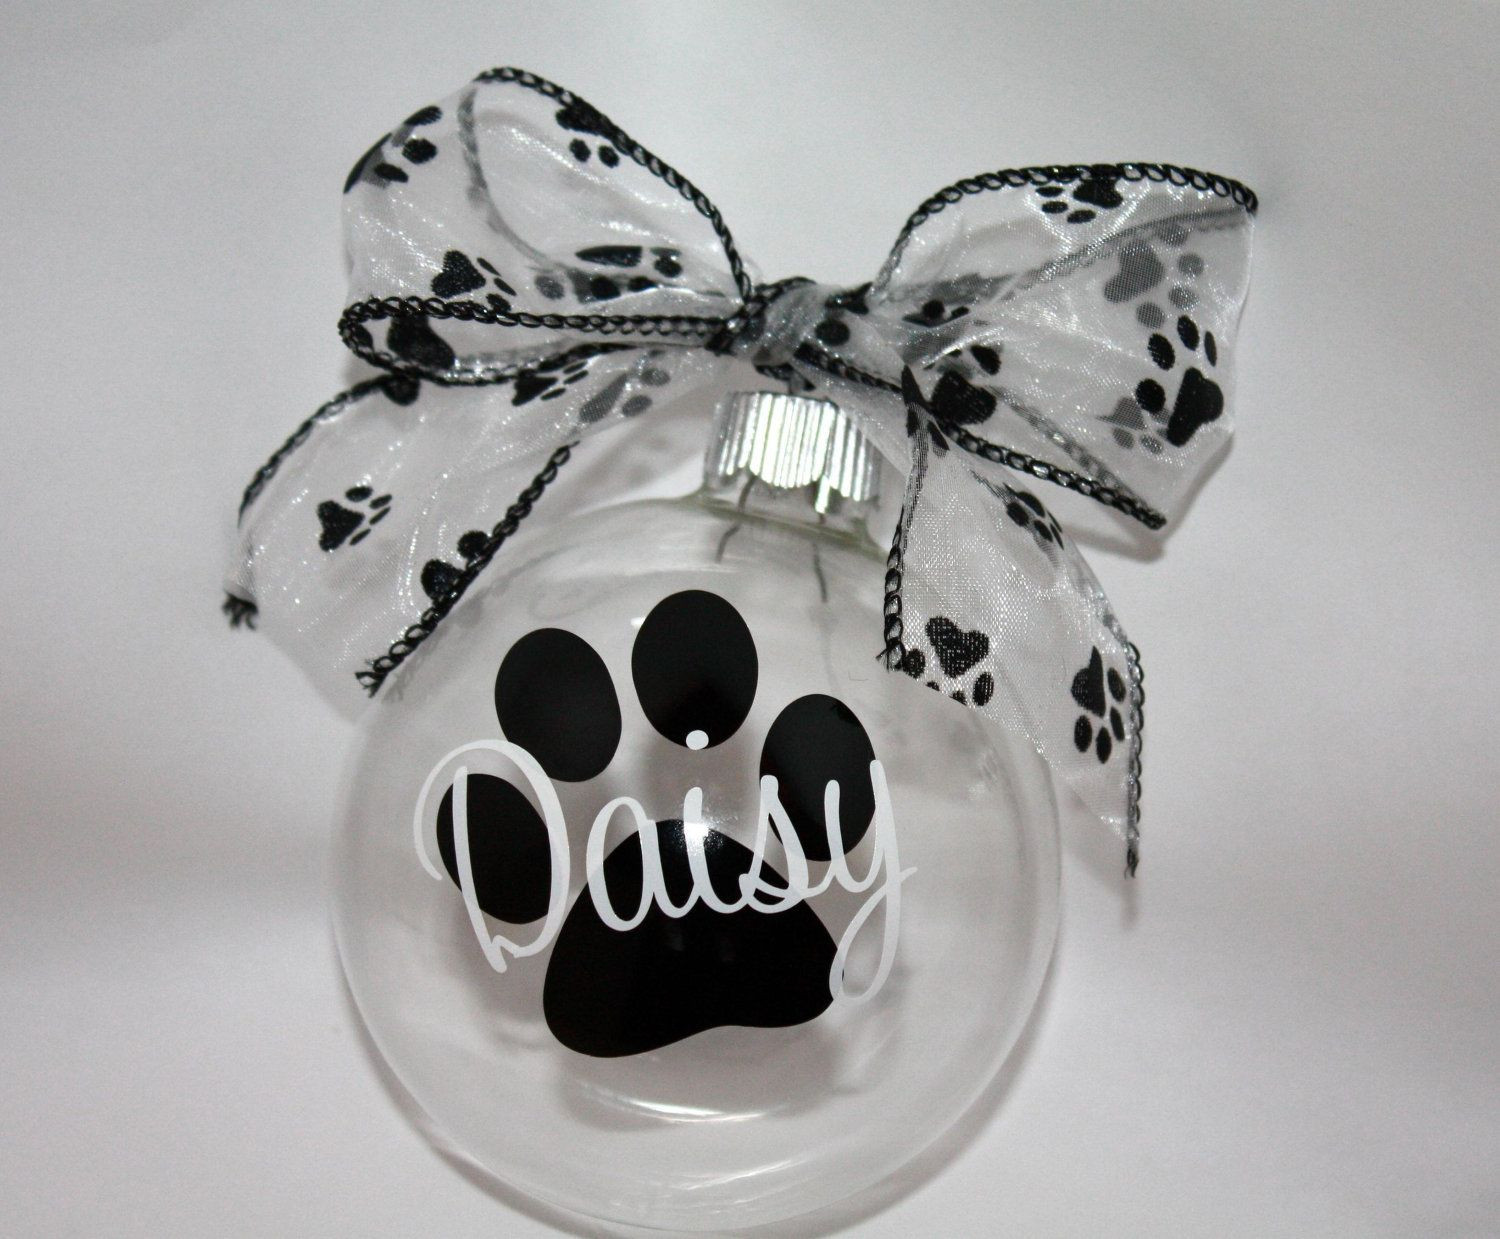 DIY Dog Paw Print Ornament
 Personalized Doggie paw print Ornament Christmas $10 00